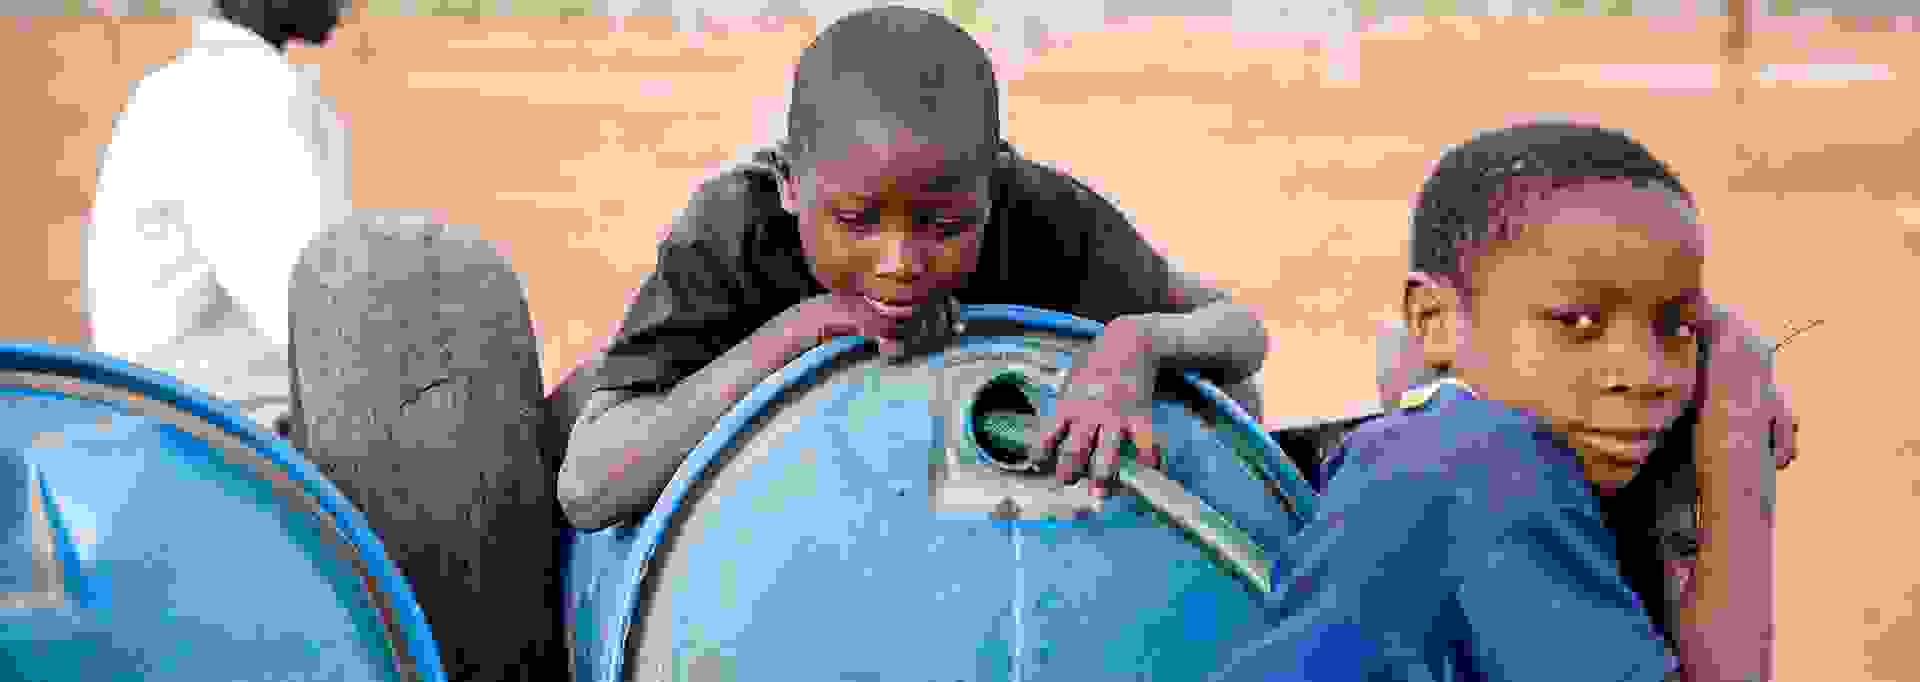 Three Zimbabwean boys by clean water barrels.